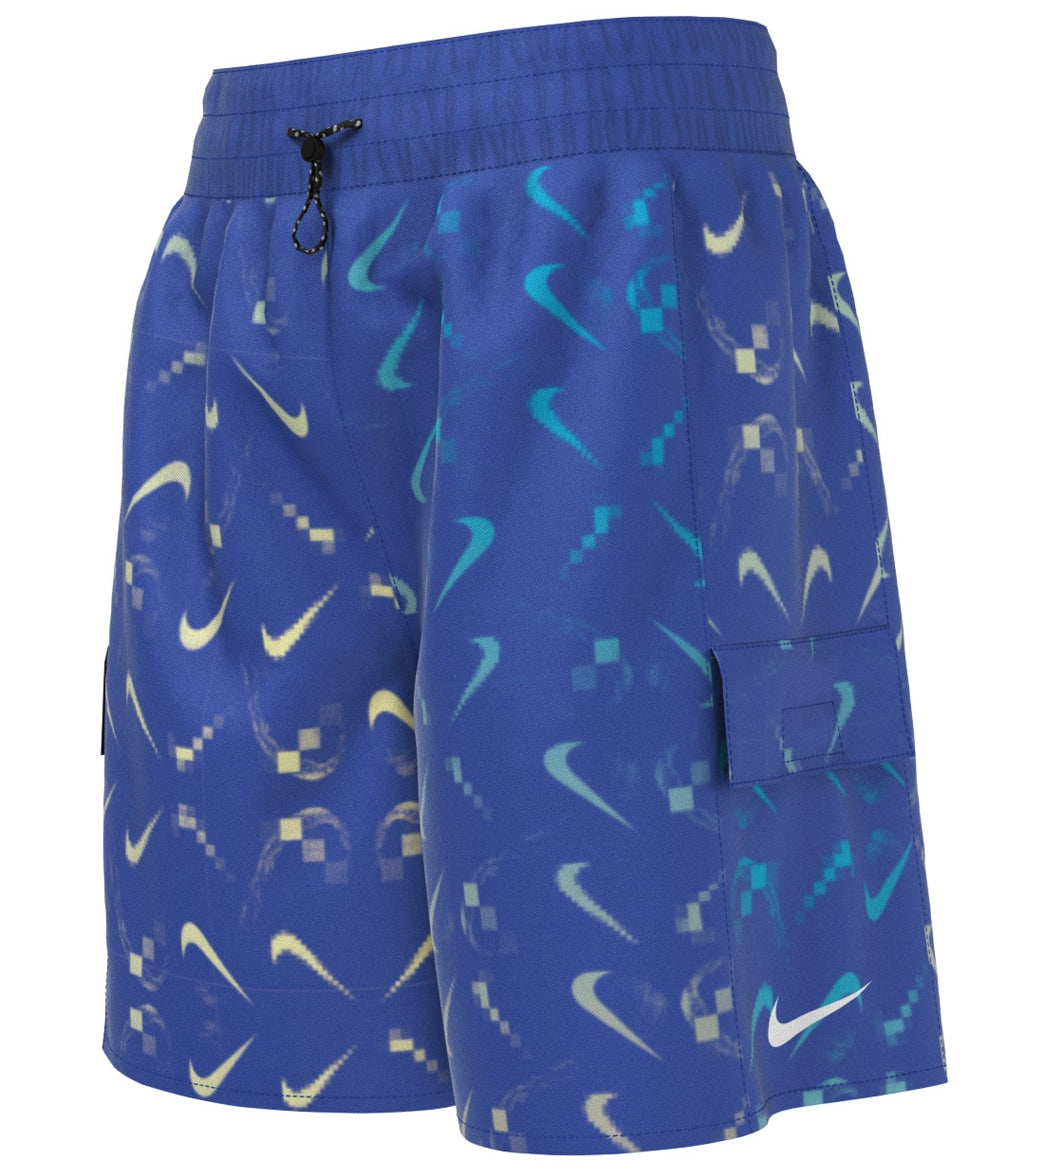 Nike Boys Digi Swoosh Ombre Cargo Shorts (Big Kid)